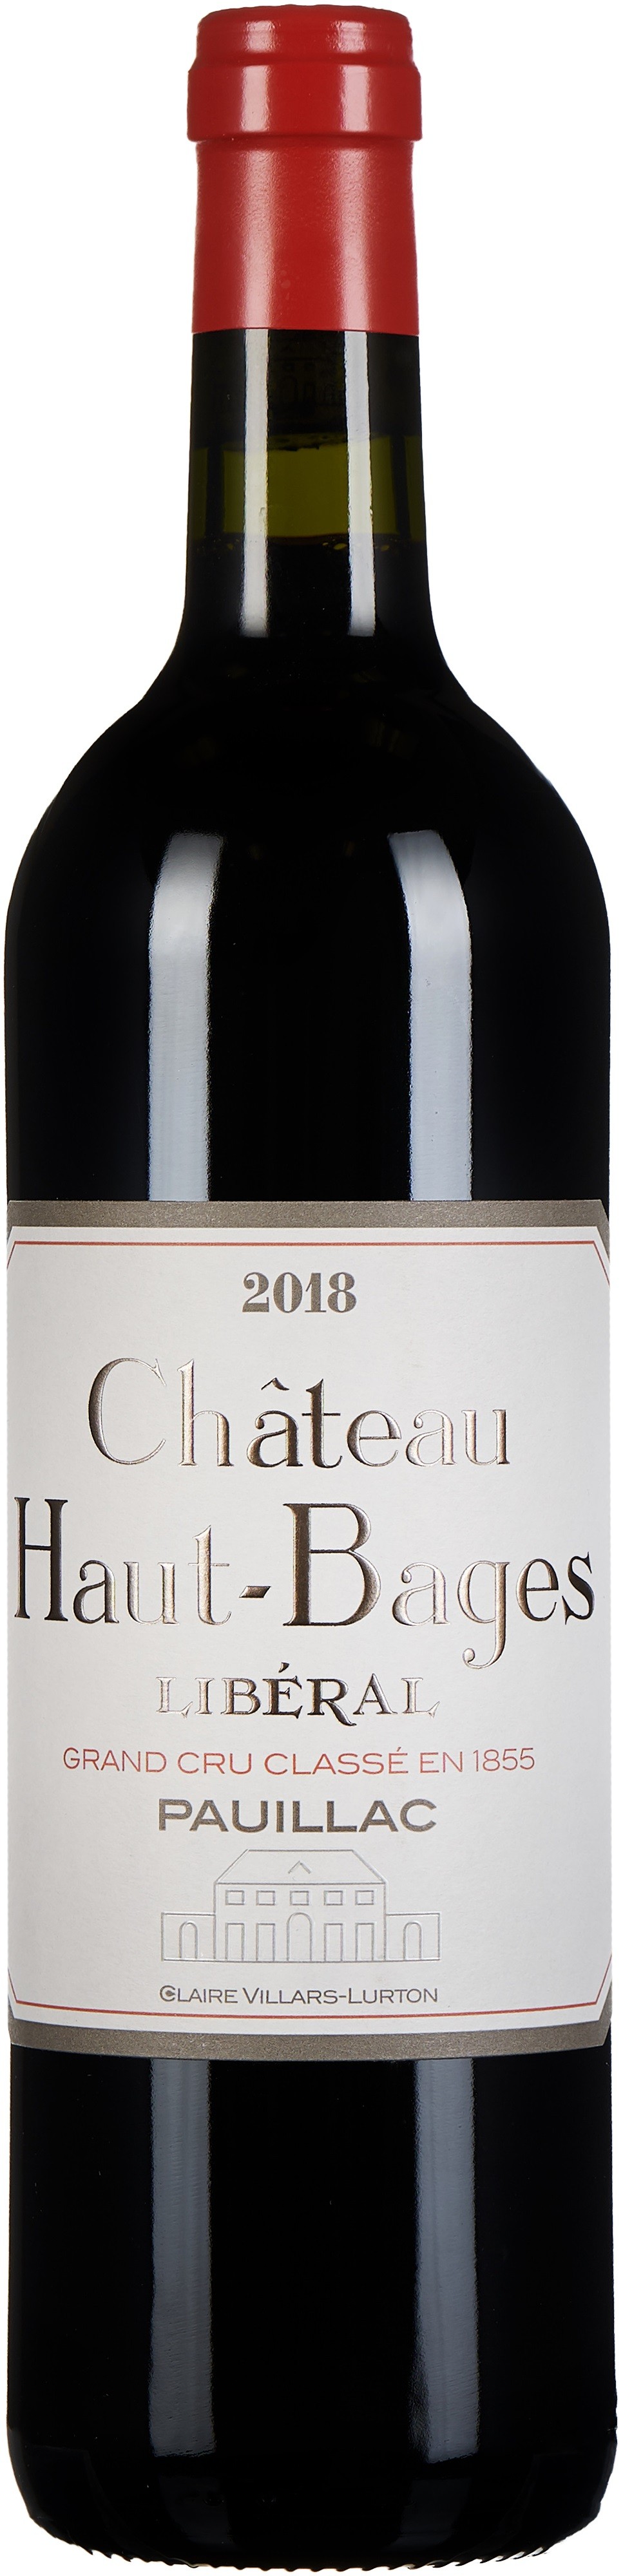 Chateau Haut Bages Liberal 2018, Pauillac 